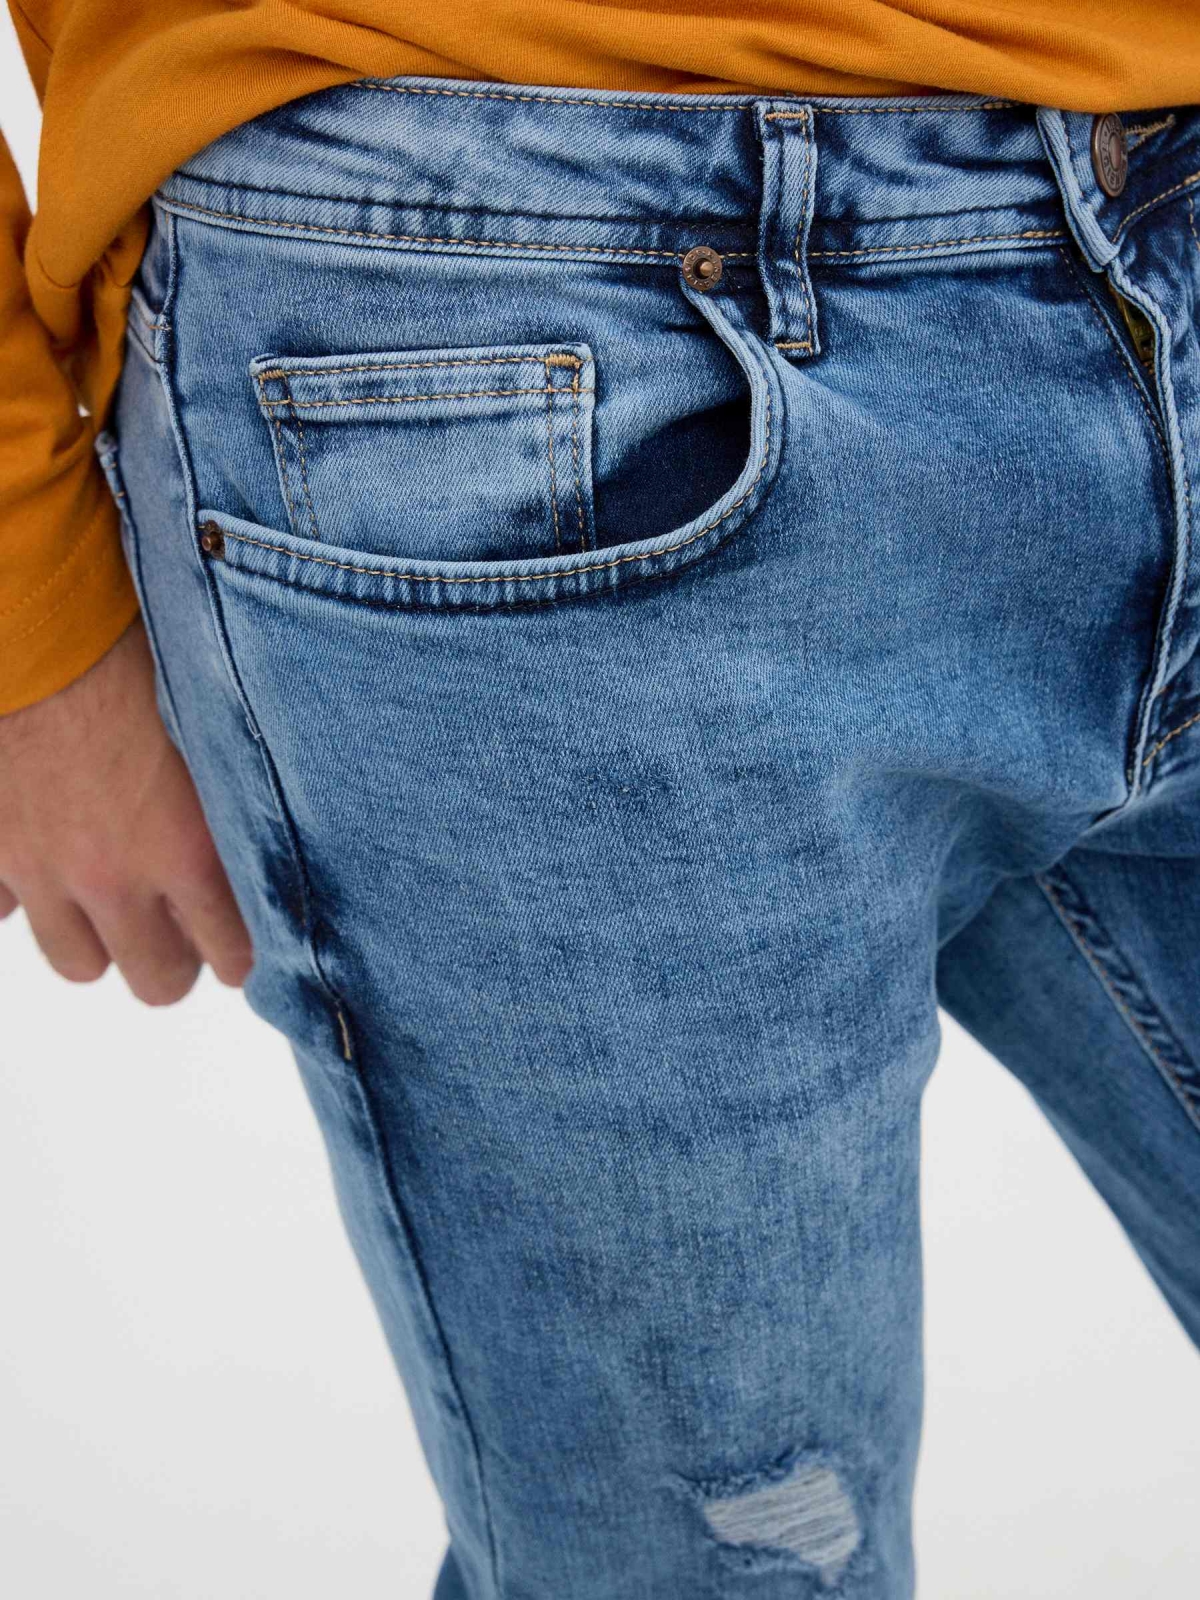 Slim jeans blue detail view